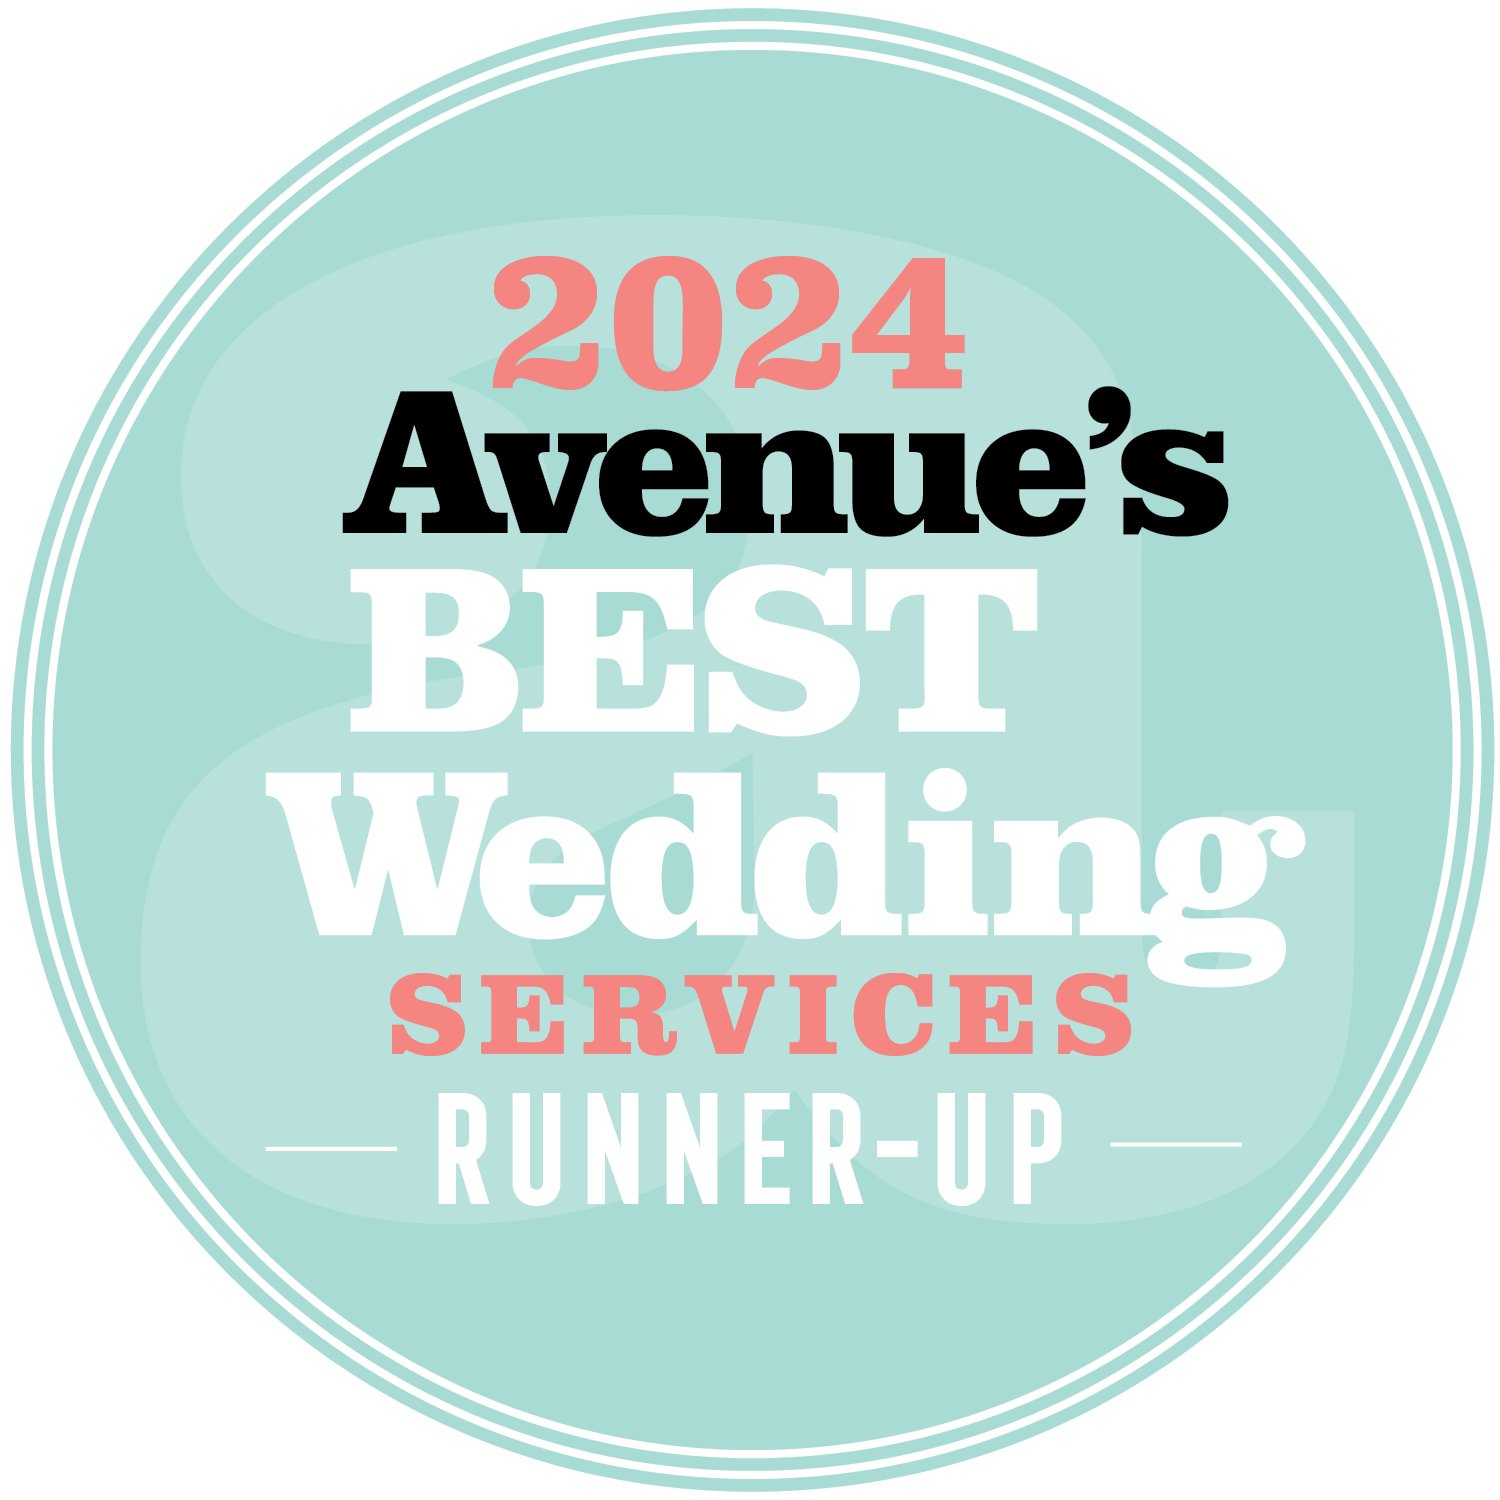 Runner-up_WeddingBallot_2024_Badges(W_RU)2.jpg